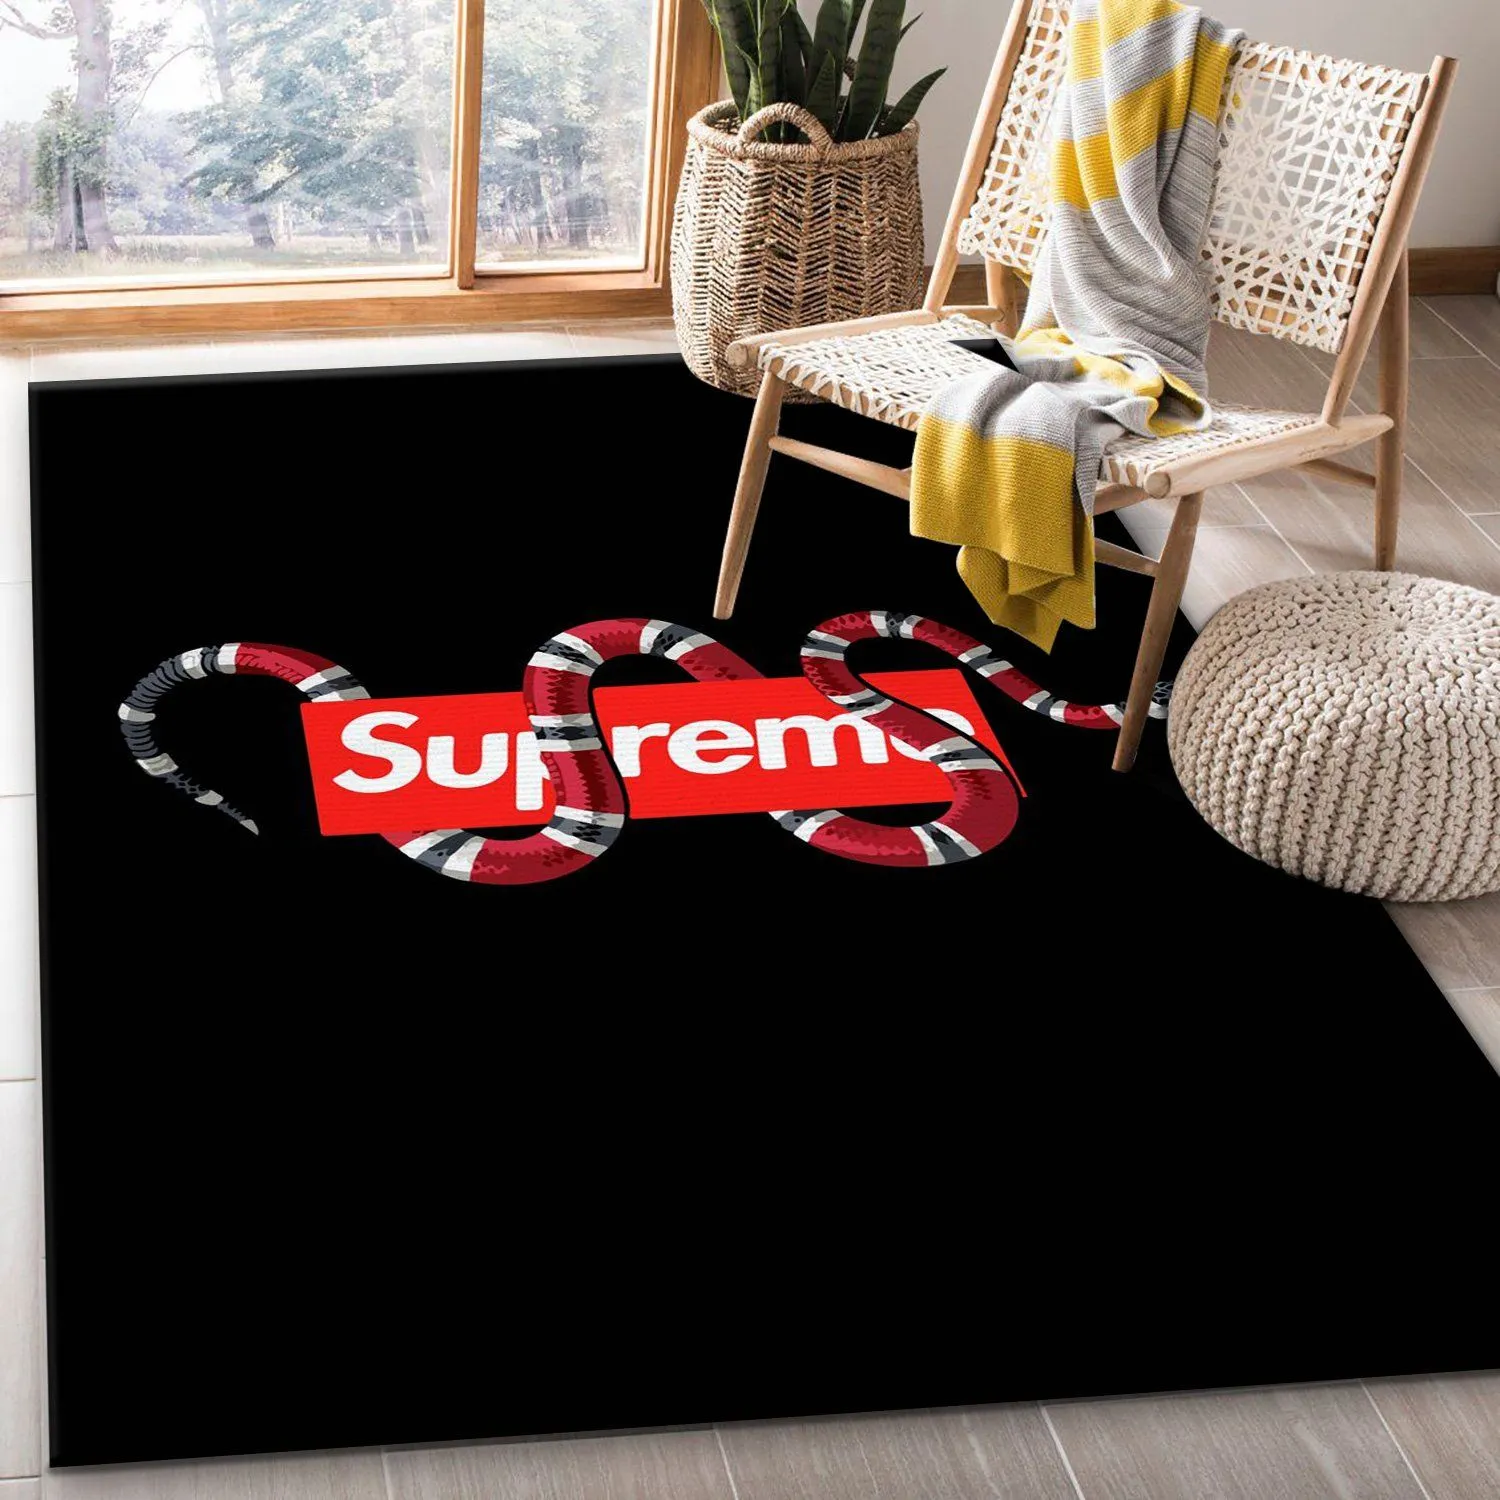 Supreme x gucci Rectangle Rug Area Carpet Home Decor Door Mat Fashion Brand Luxury